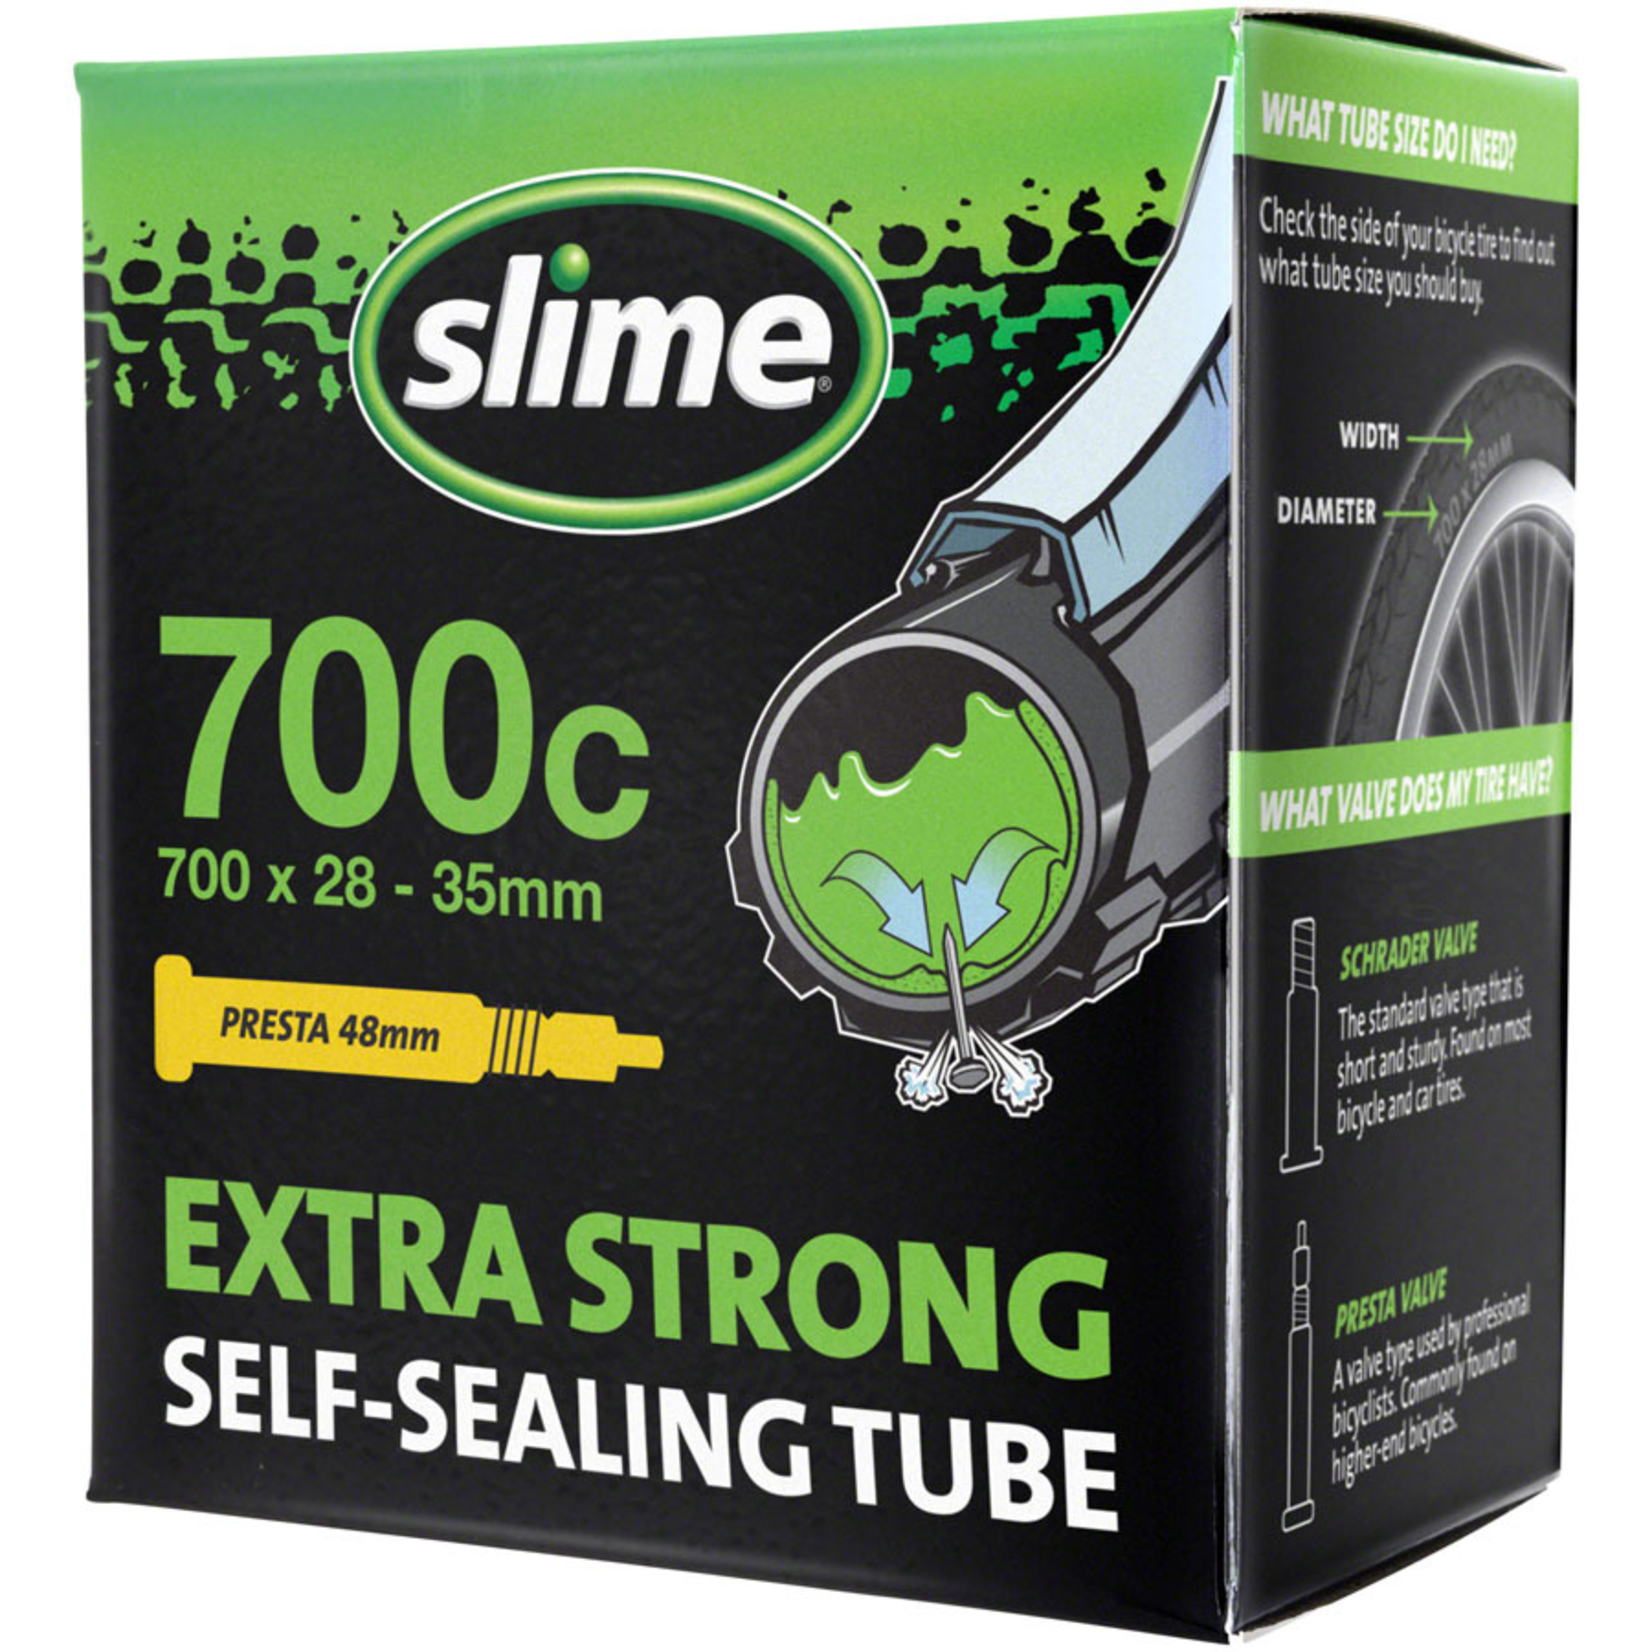 Slime Self-Sealing Tube 700c x 28mm-35mm 48mm Presta Valve